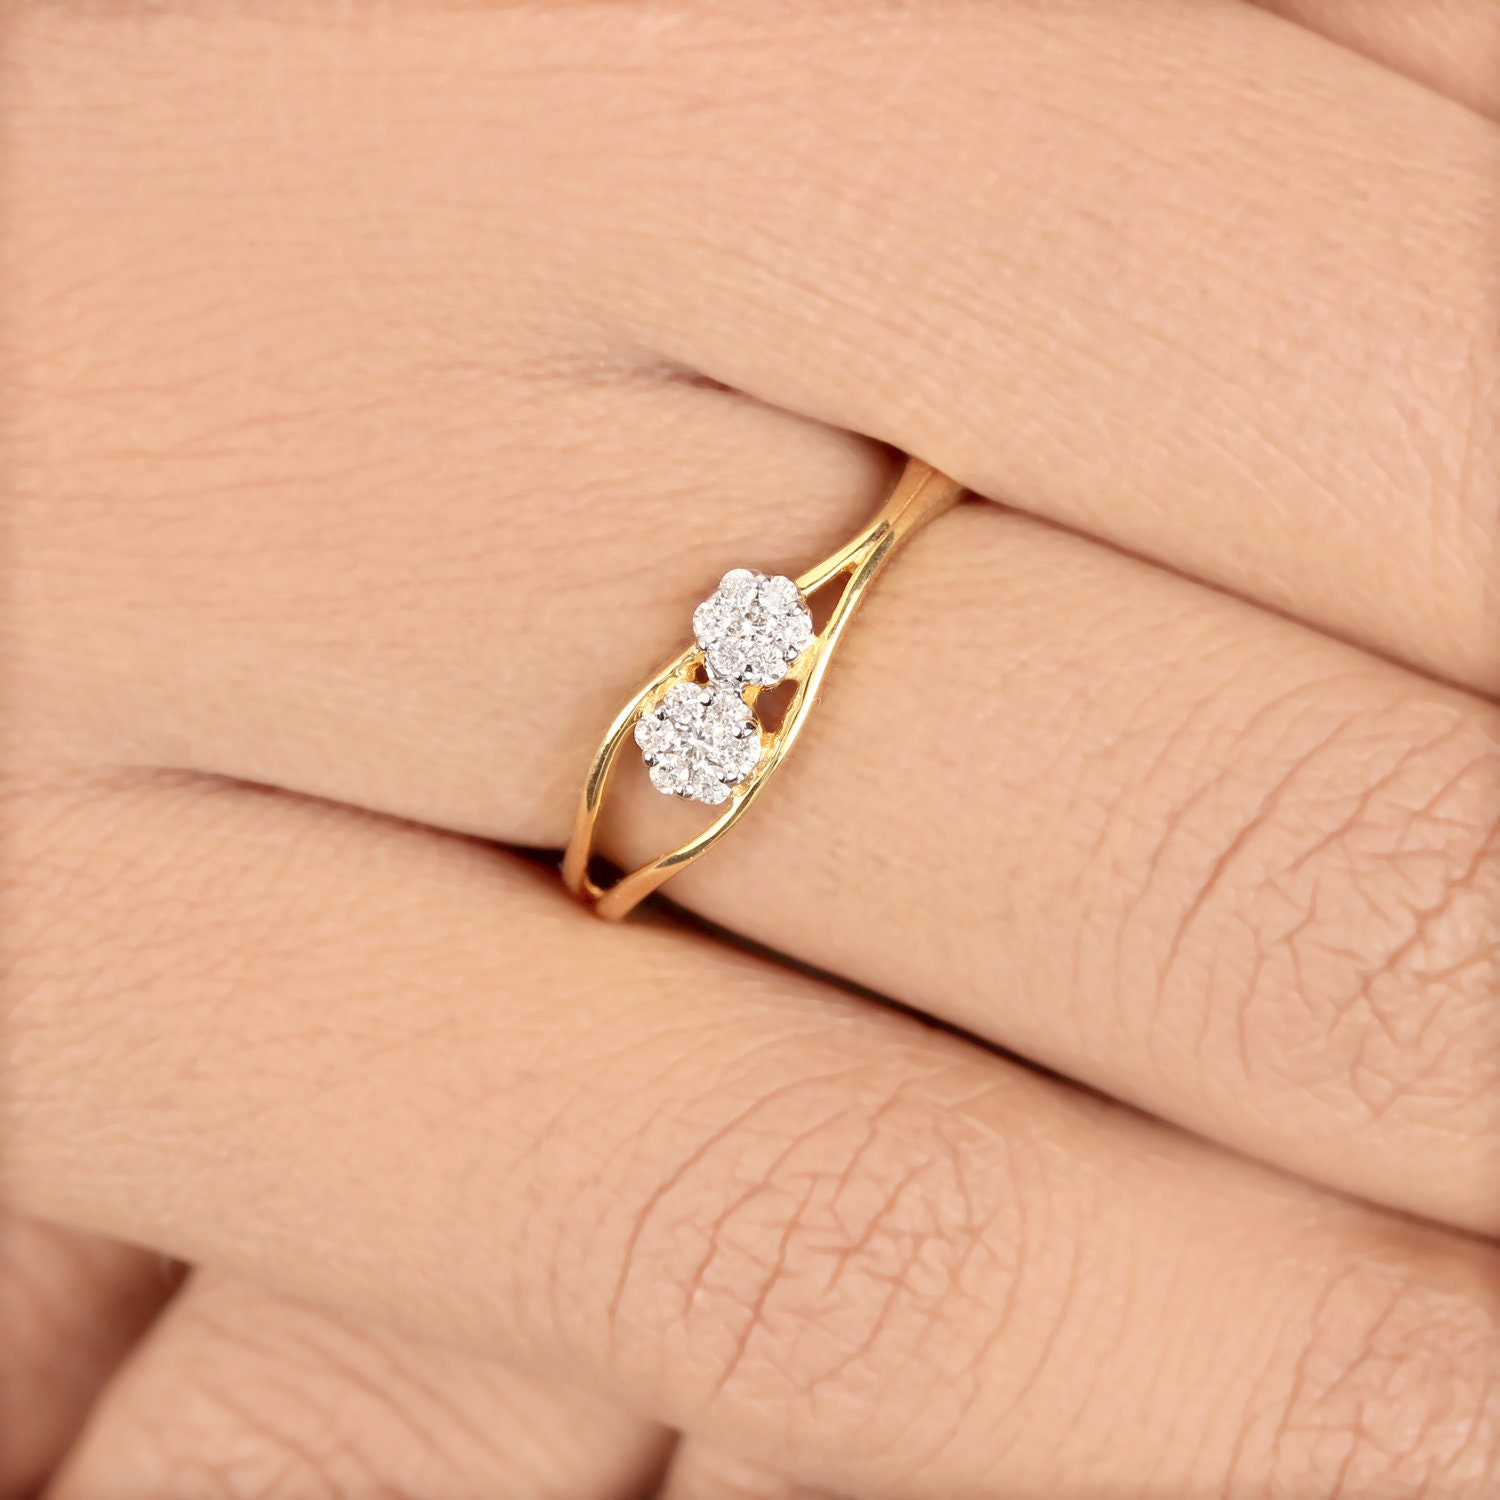 Turtle Gold Ring with Diamond and Semi Precious Stones